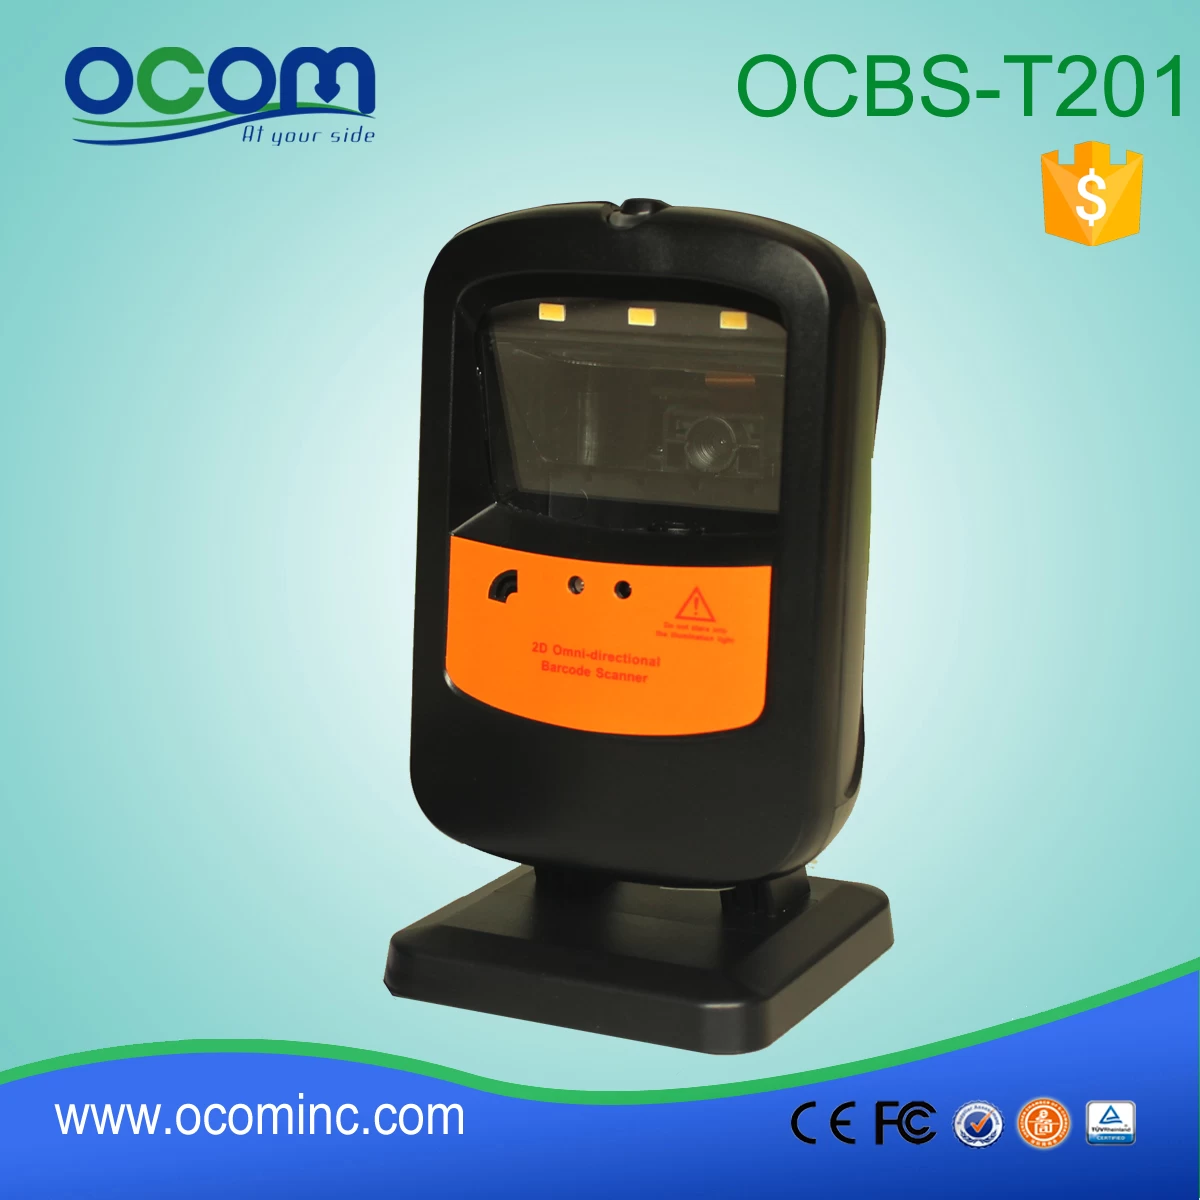 OCBS-T201:fixed mount barcode scanner mini usb, laser barcode scanner